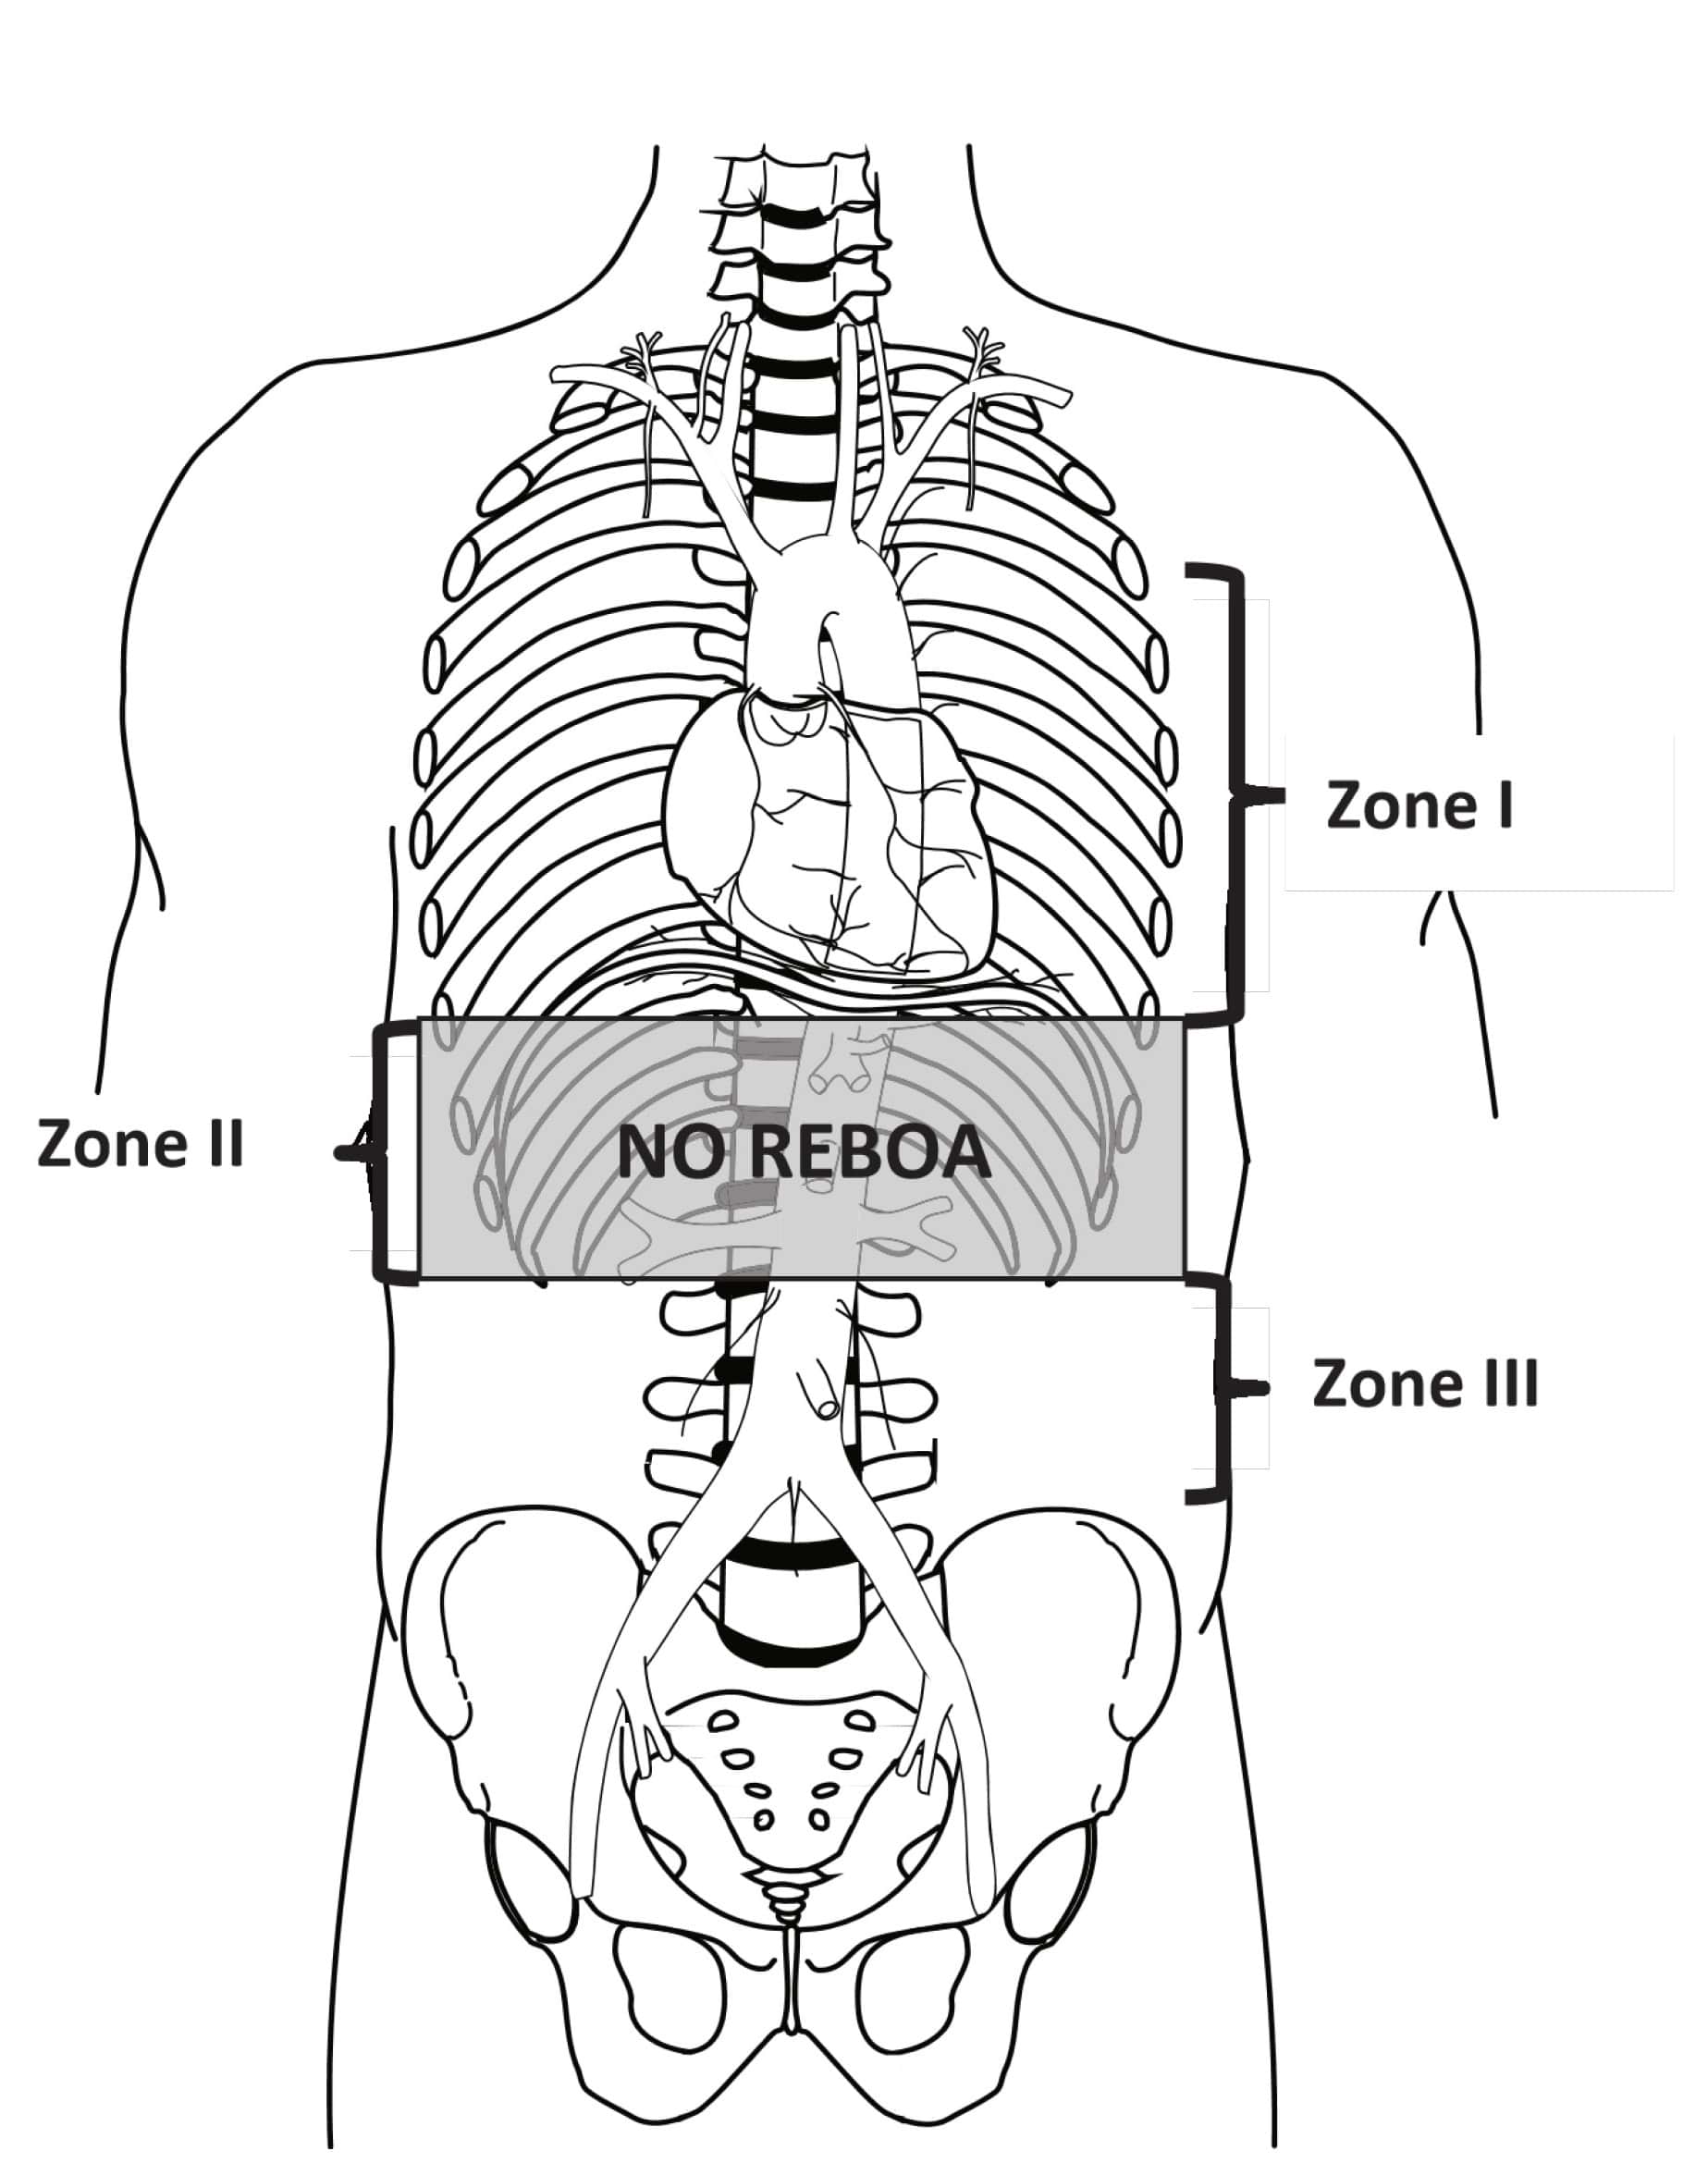 Aortic Zones